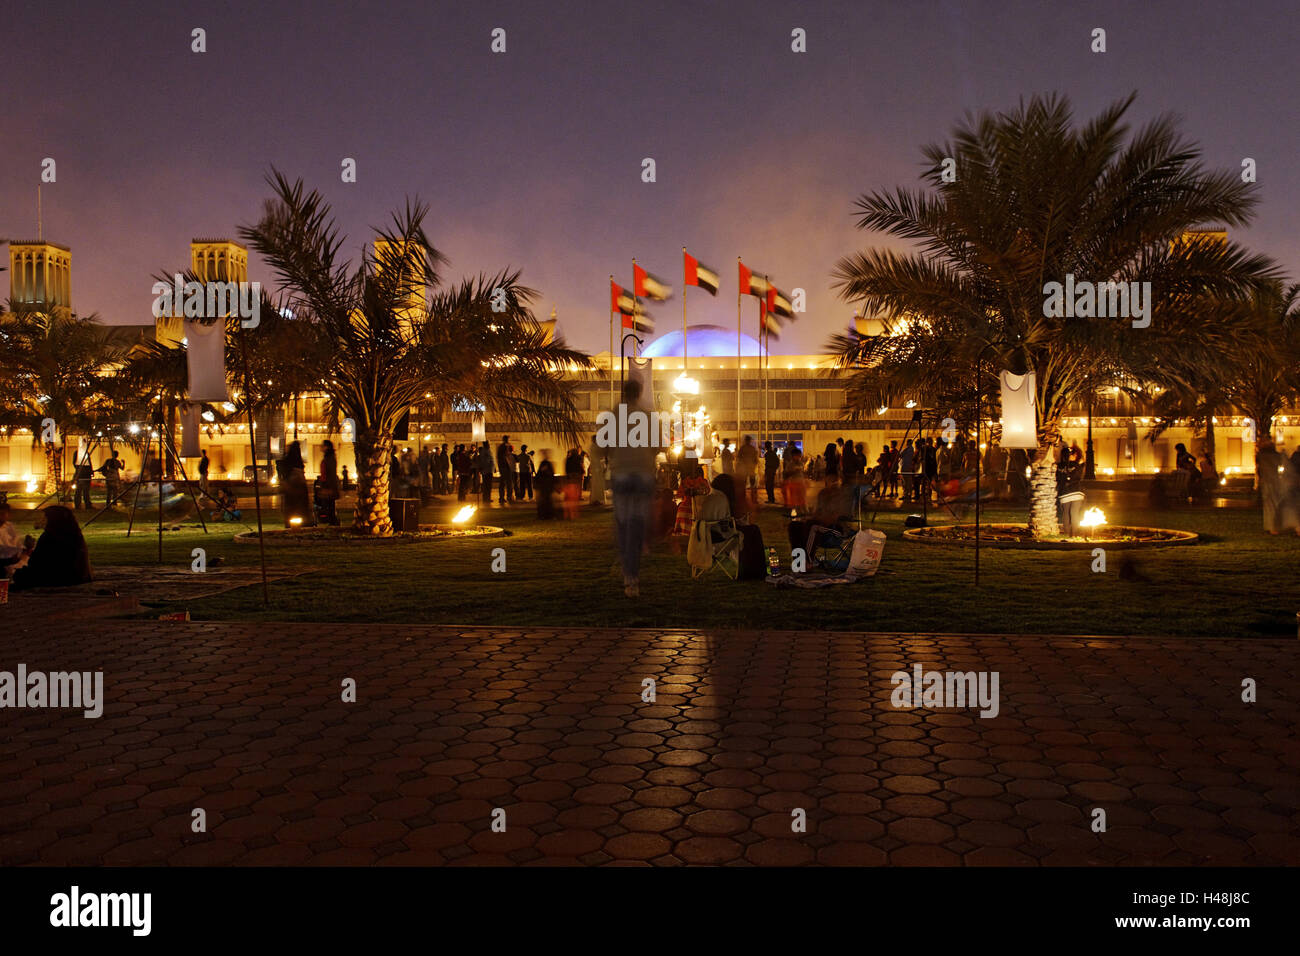 Fire performance, Light festival, evening, Old Souk, blue Souk, traditional shopping centre, emirate Sharjah, United Arab Emirates, Arabian peninsula, the Middle East, Asia, Stock Photo